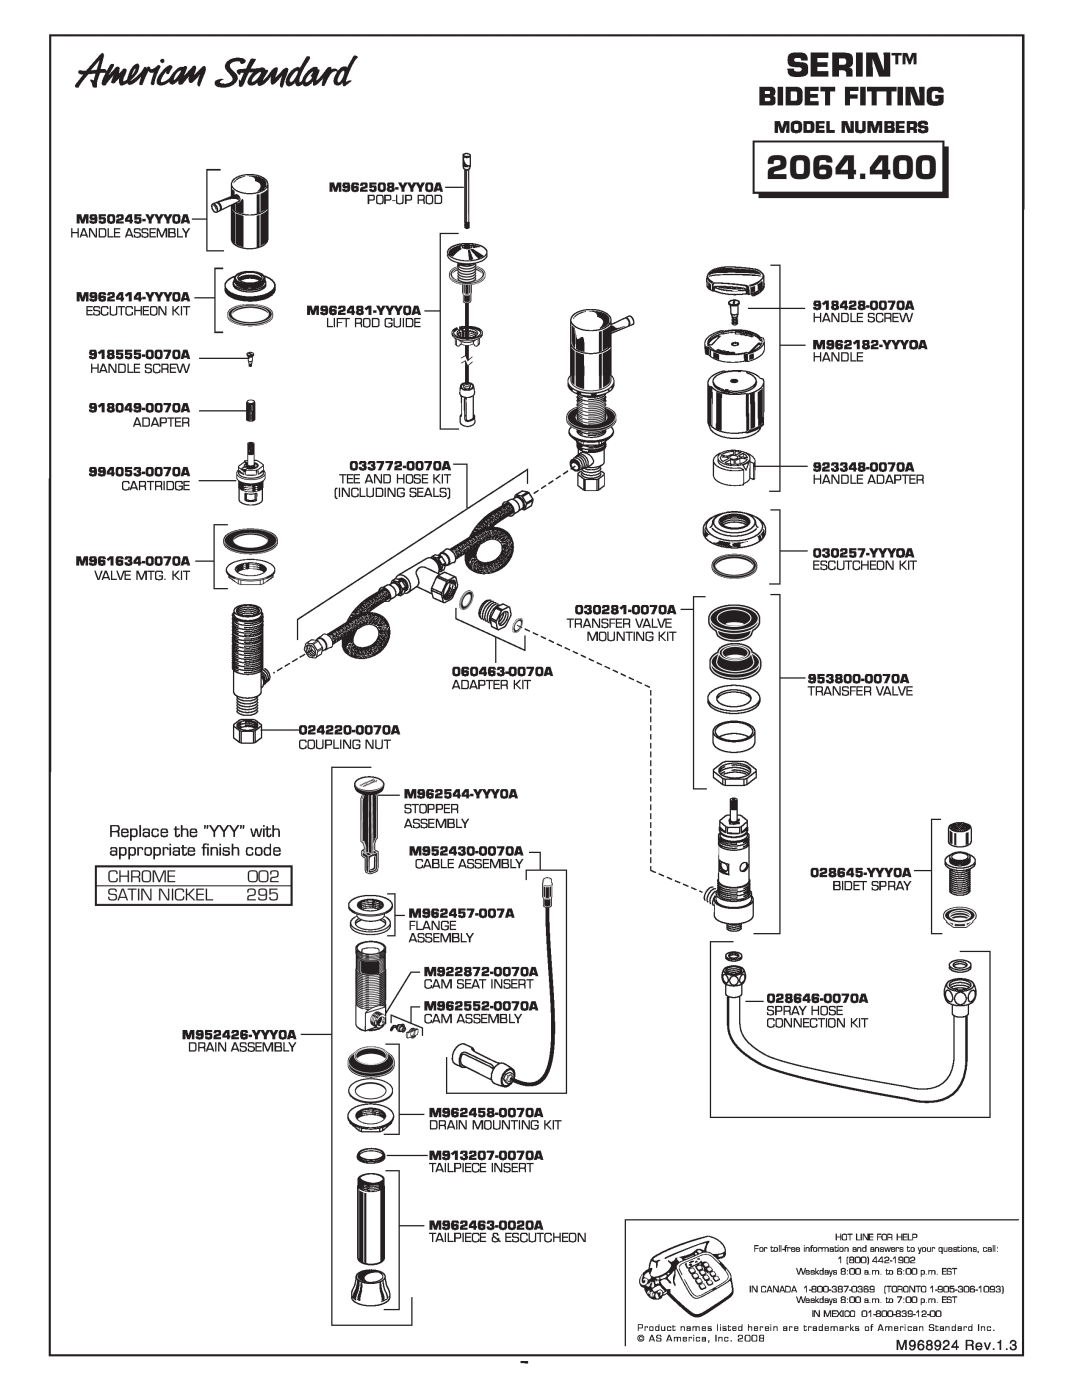 American Standard installation instructions Bidet Fitting, Model Numbers, Serin, 2064.400, M968924 Rev.1.3 